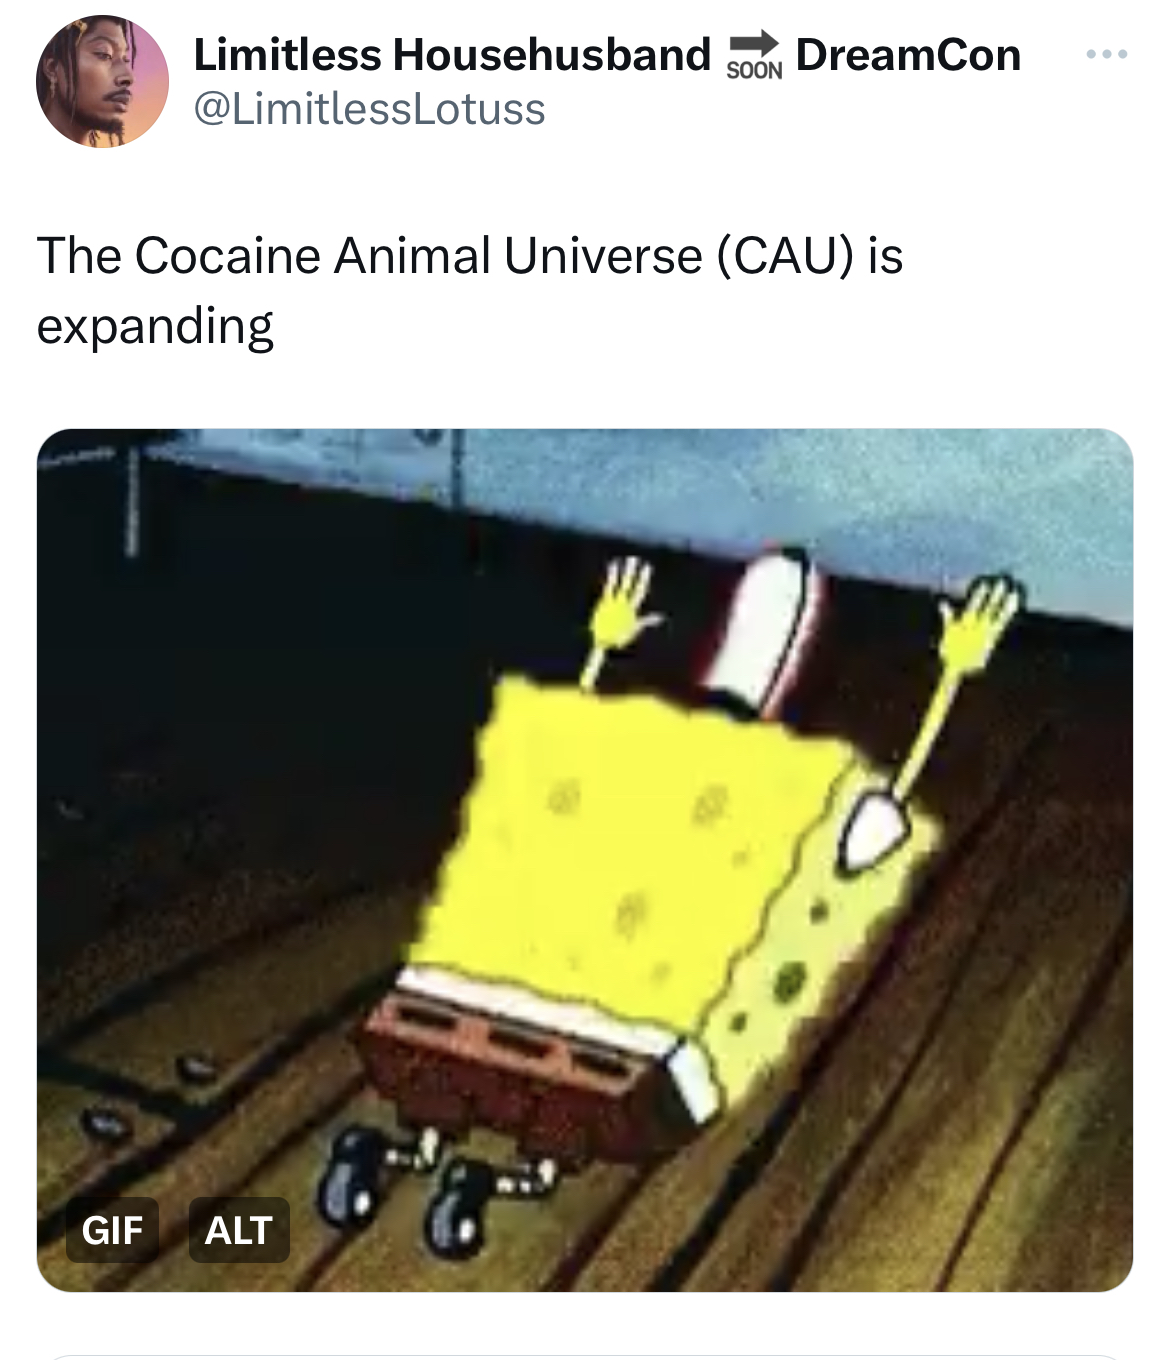 Ohio Cocaine Cat memes - spongebob and justin bieber - Limitless Househusband DreamCon Soon The Cocaine Animal Universe Cau is expanding Gif Alt